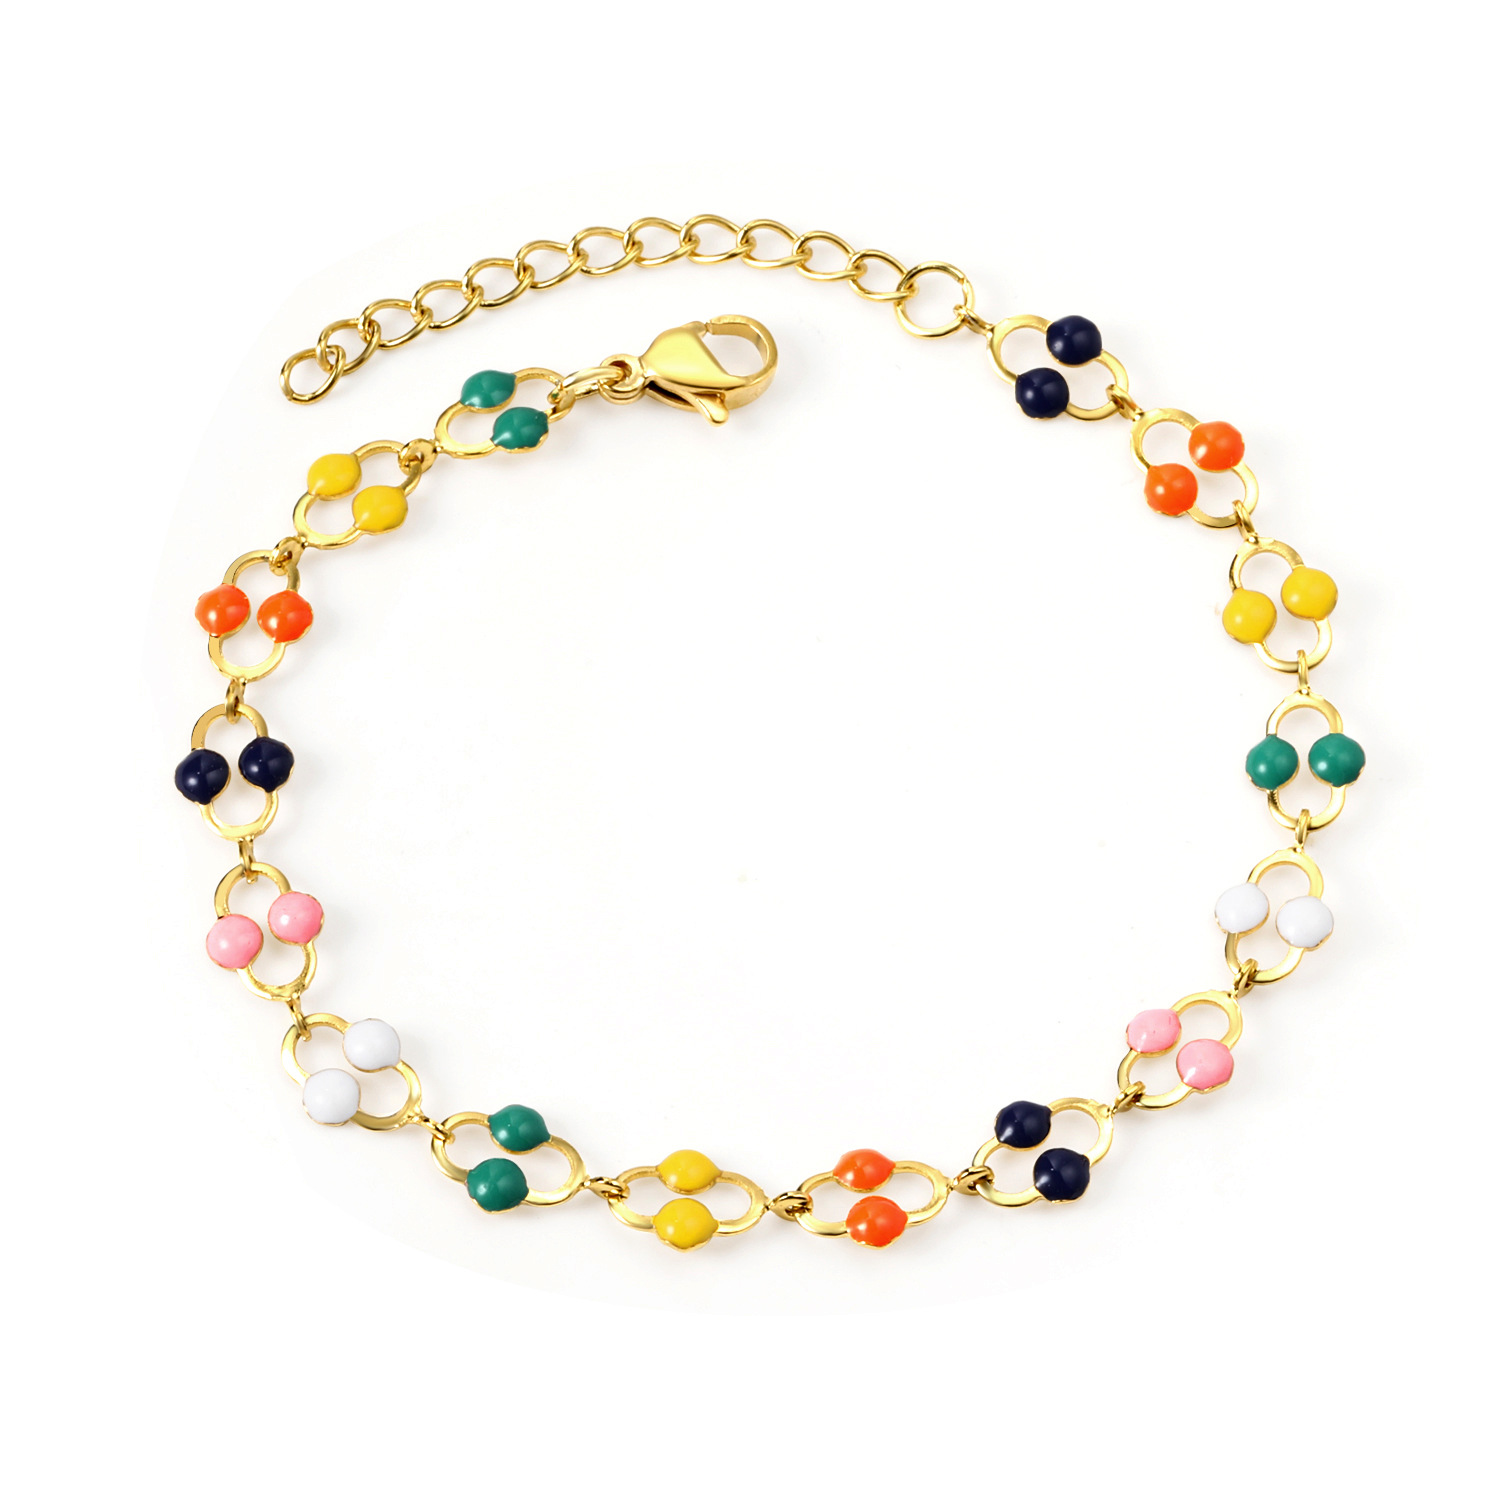 2:Colored oil U-shaped bracelet